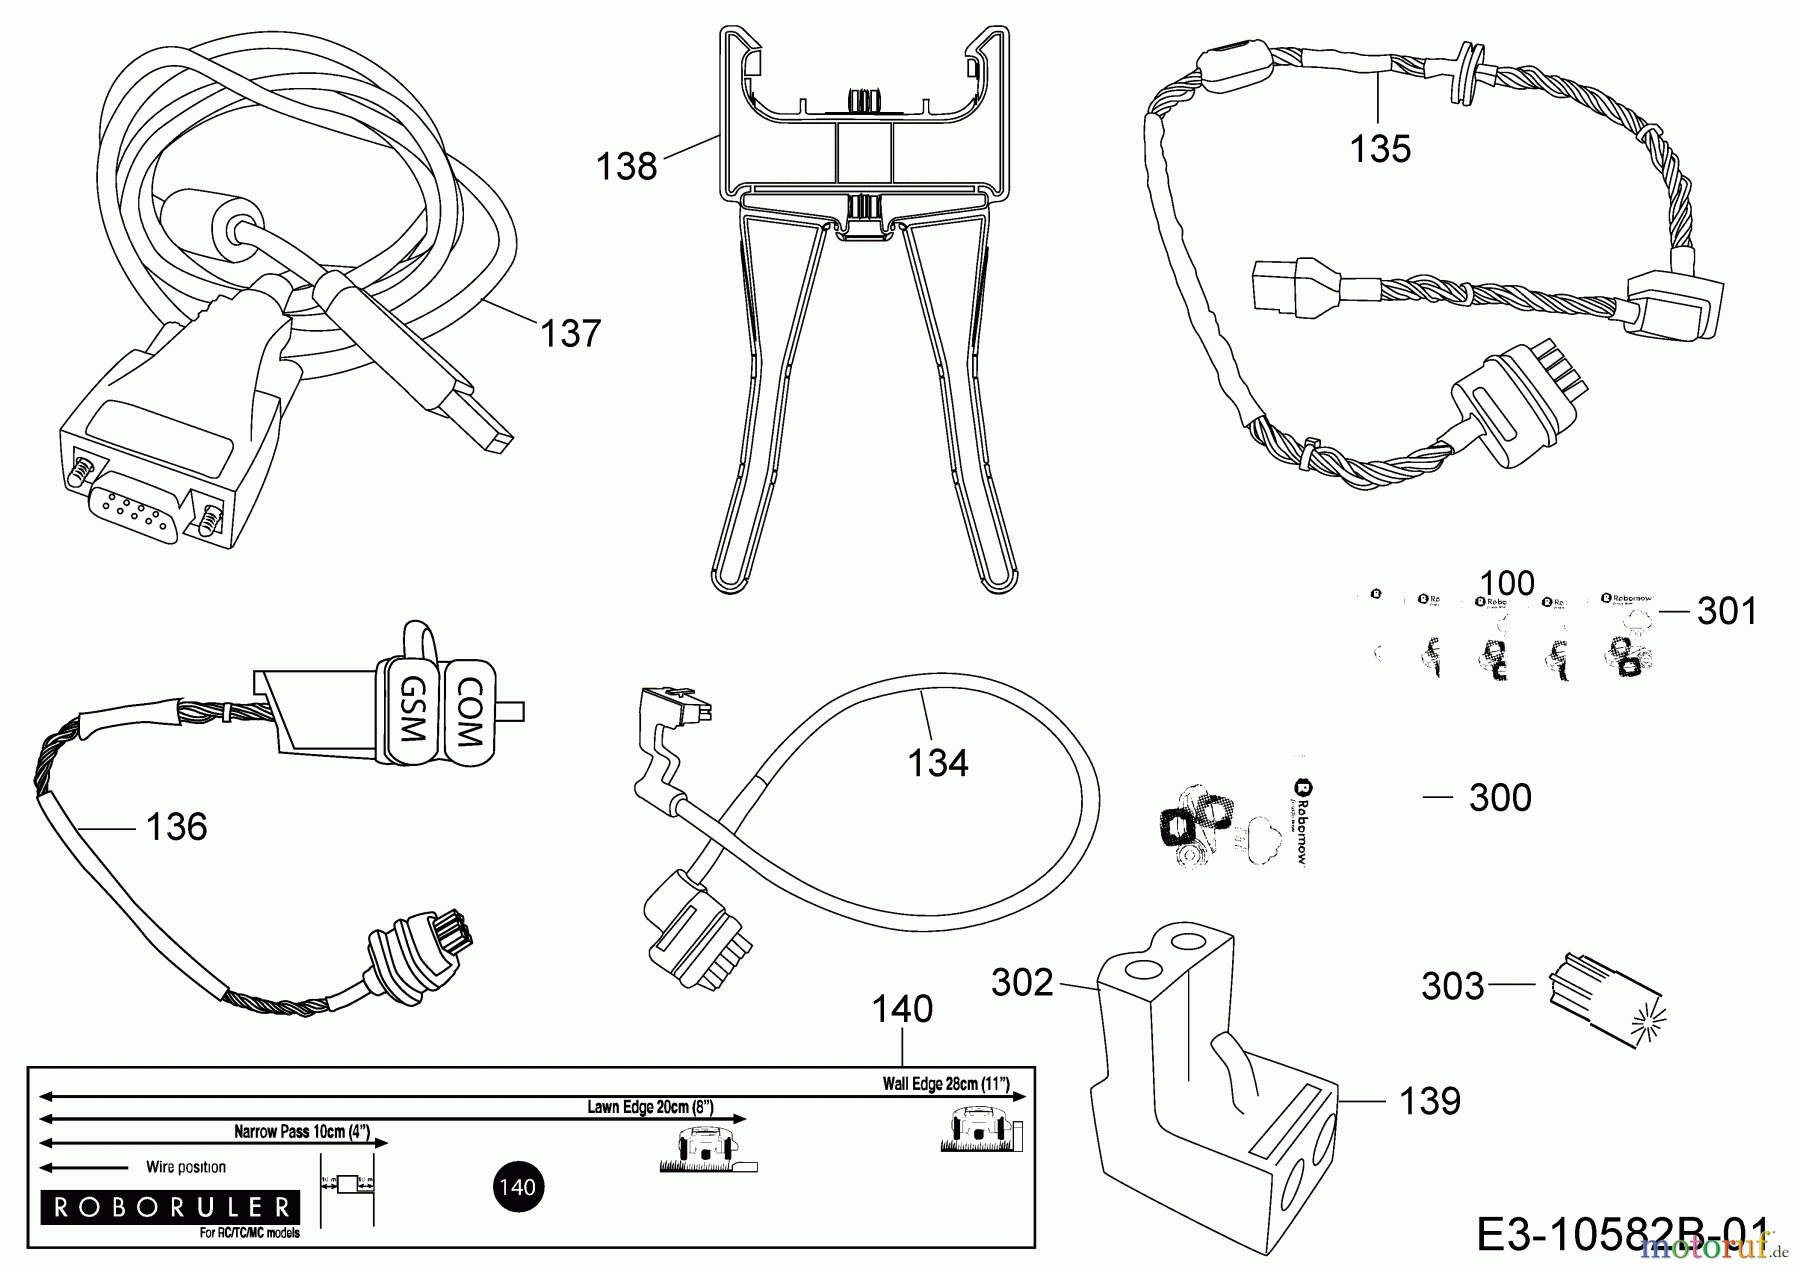  Robomow Mähroboter RC312 PRO S (Red) PRD7004B1  (2017) Kabel, Kabelanschluß, Regensensor, Werkzeug